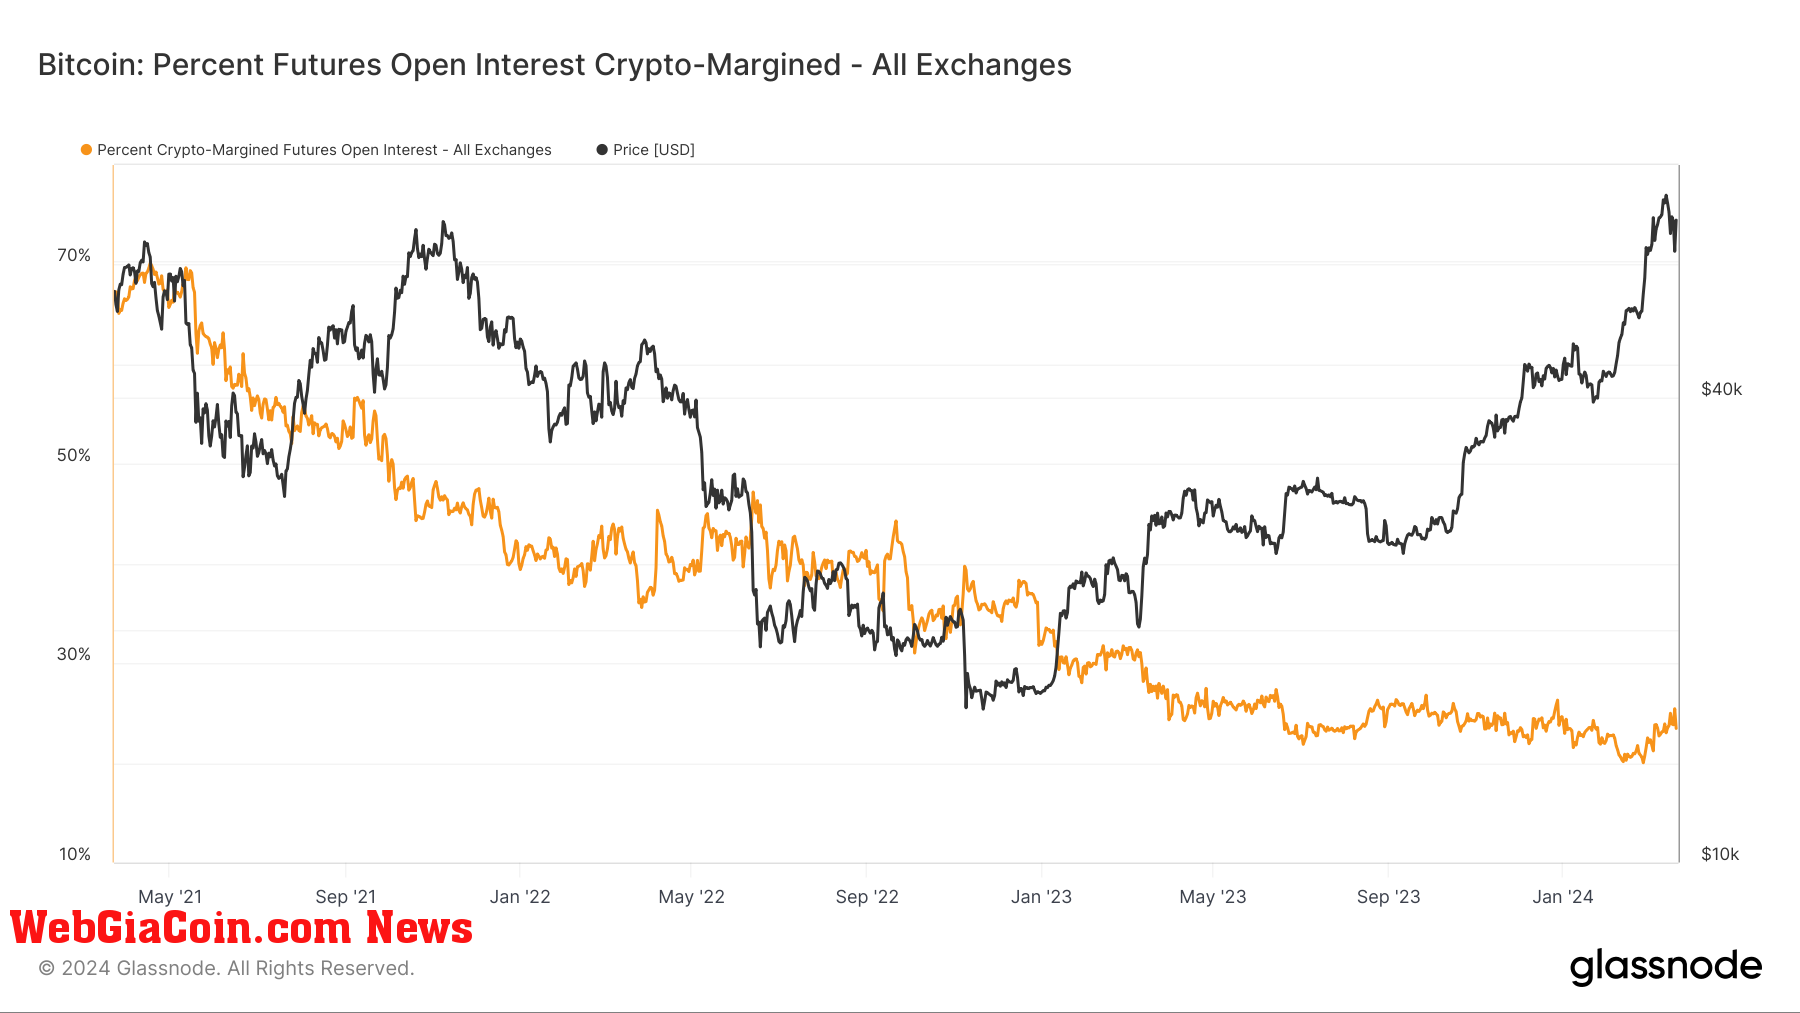 Futures Open Interest Crypto-Margined: (Source: Glassnode)